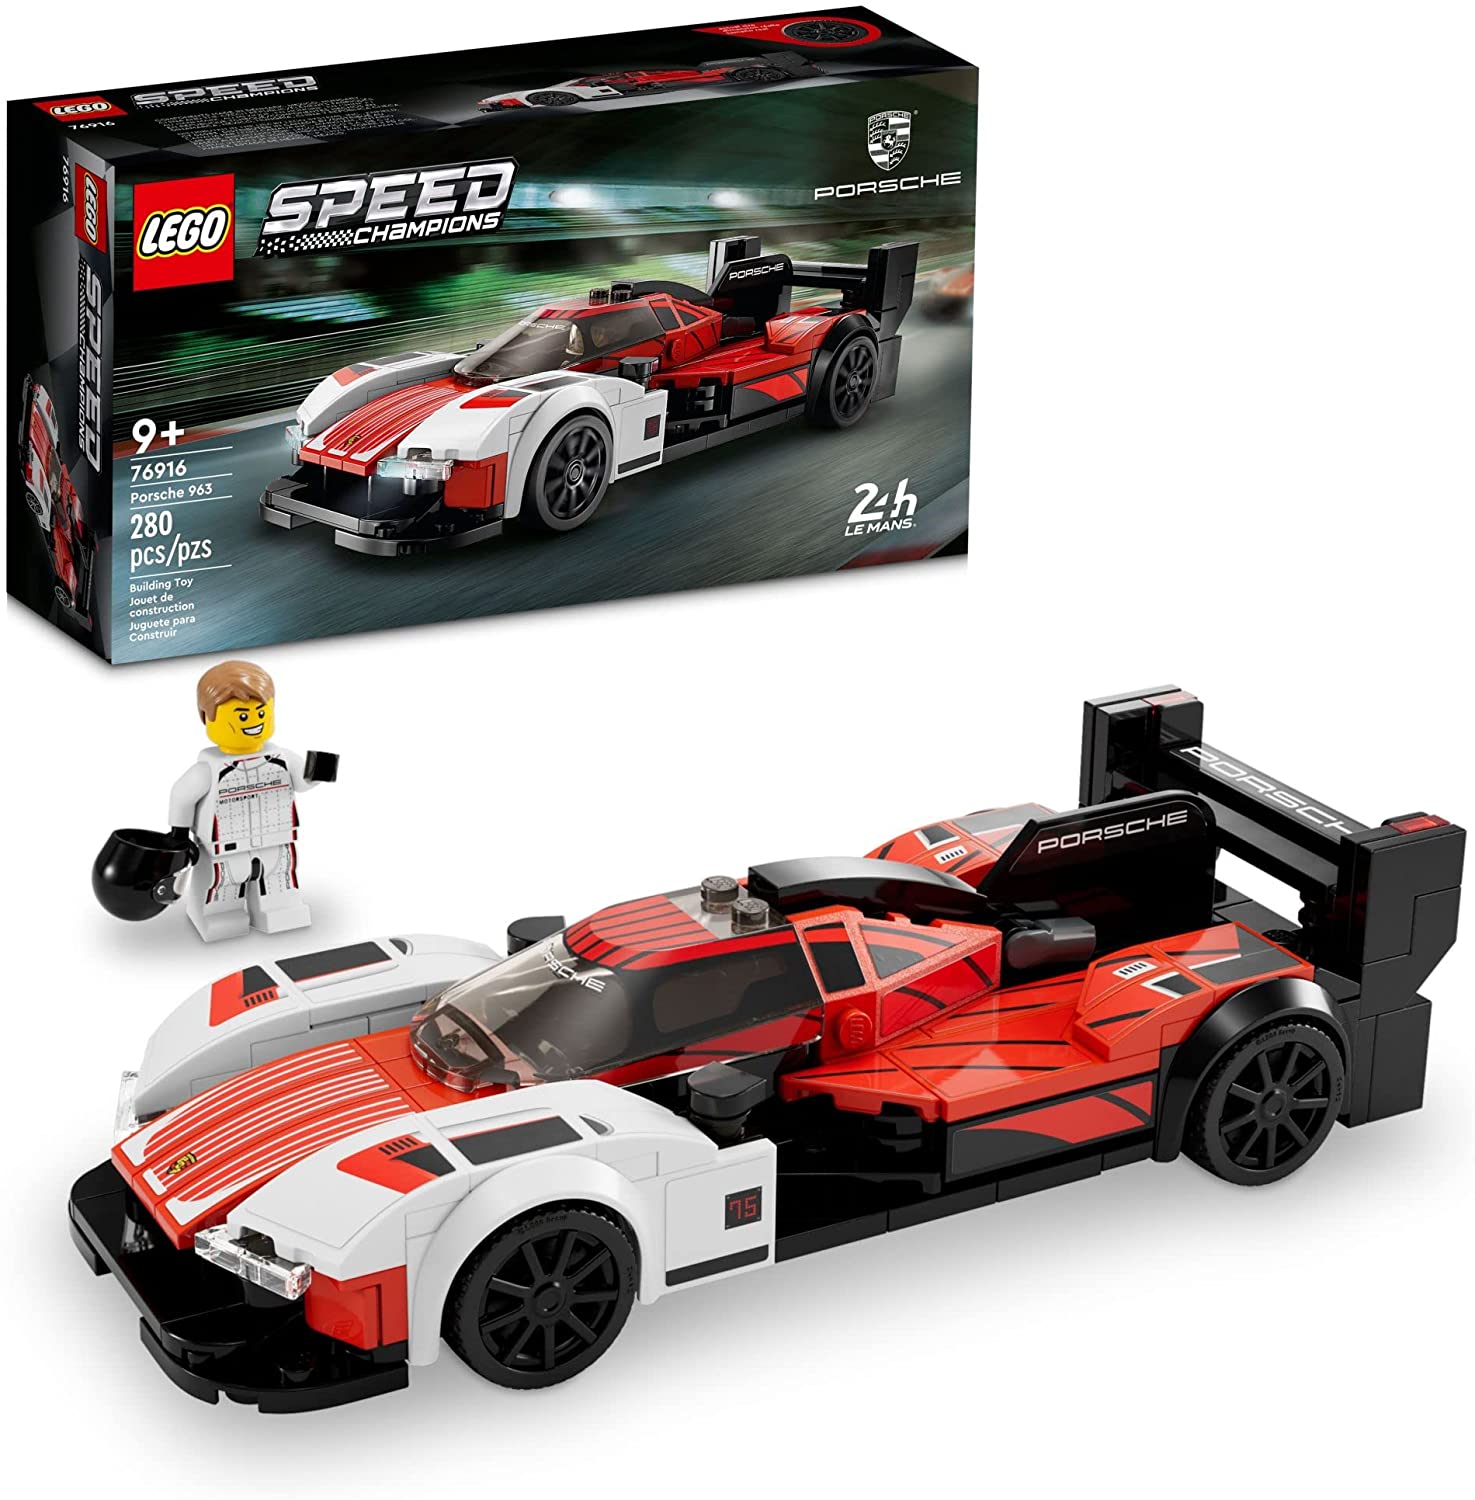 LEGO Speed Champions Porsche 963 Le Mans Daytona Hybrid